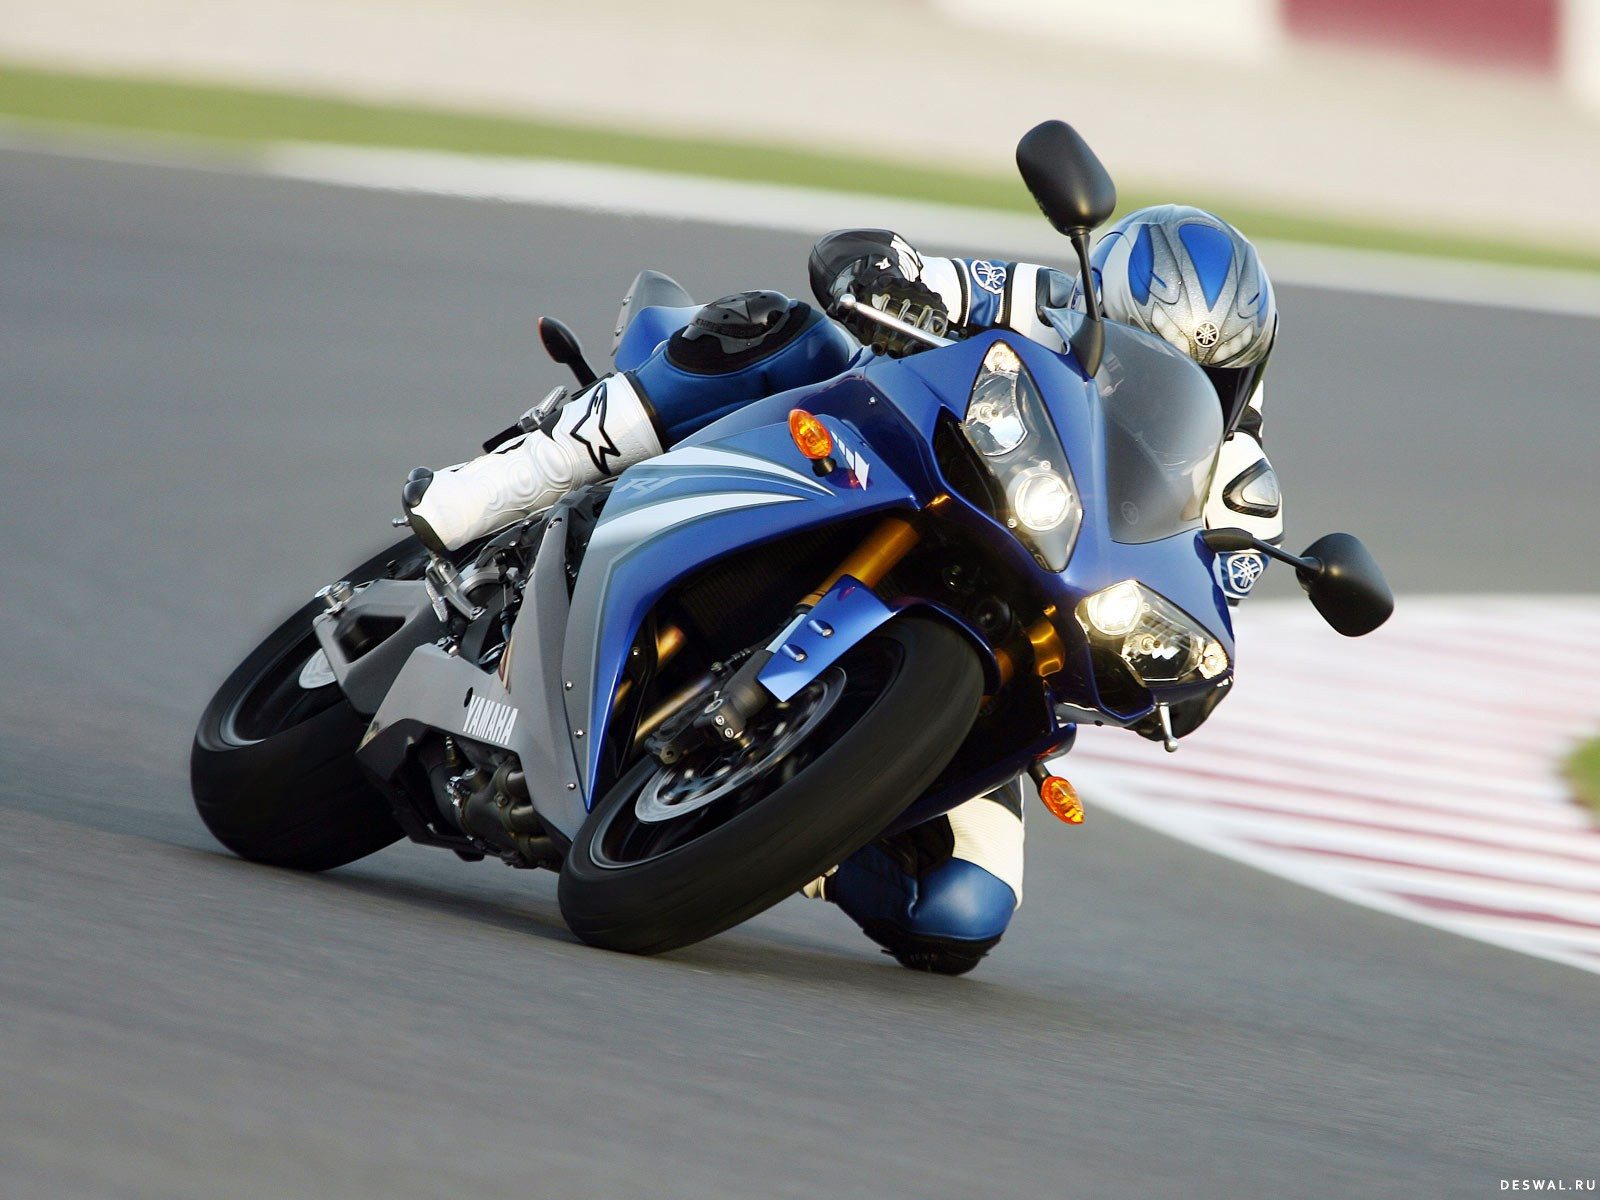 Yamaha r1 2007. Ямаха YZF-r1 2007. Yamaha r1 2007-2008. R1 мотоцикл 2007.